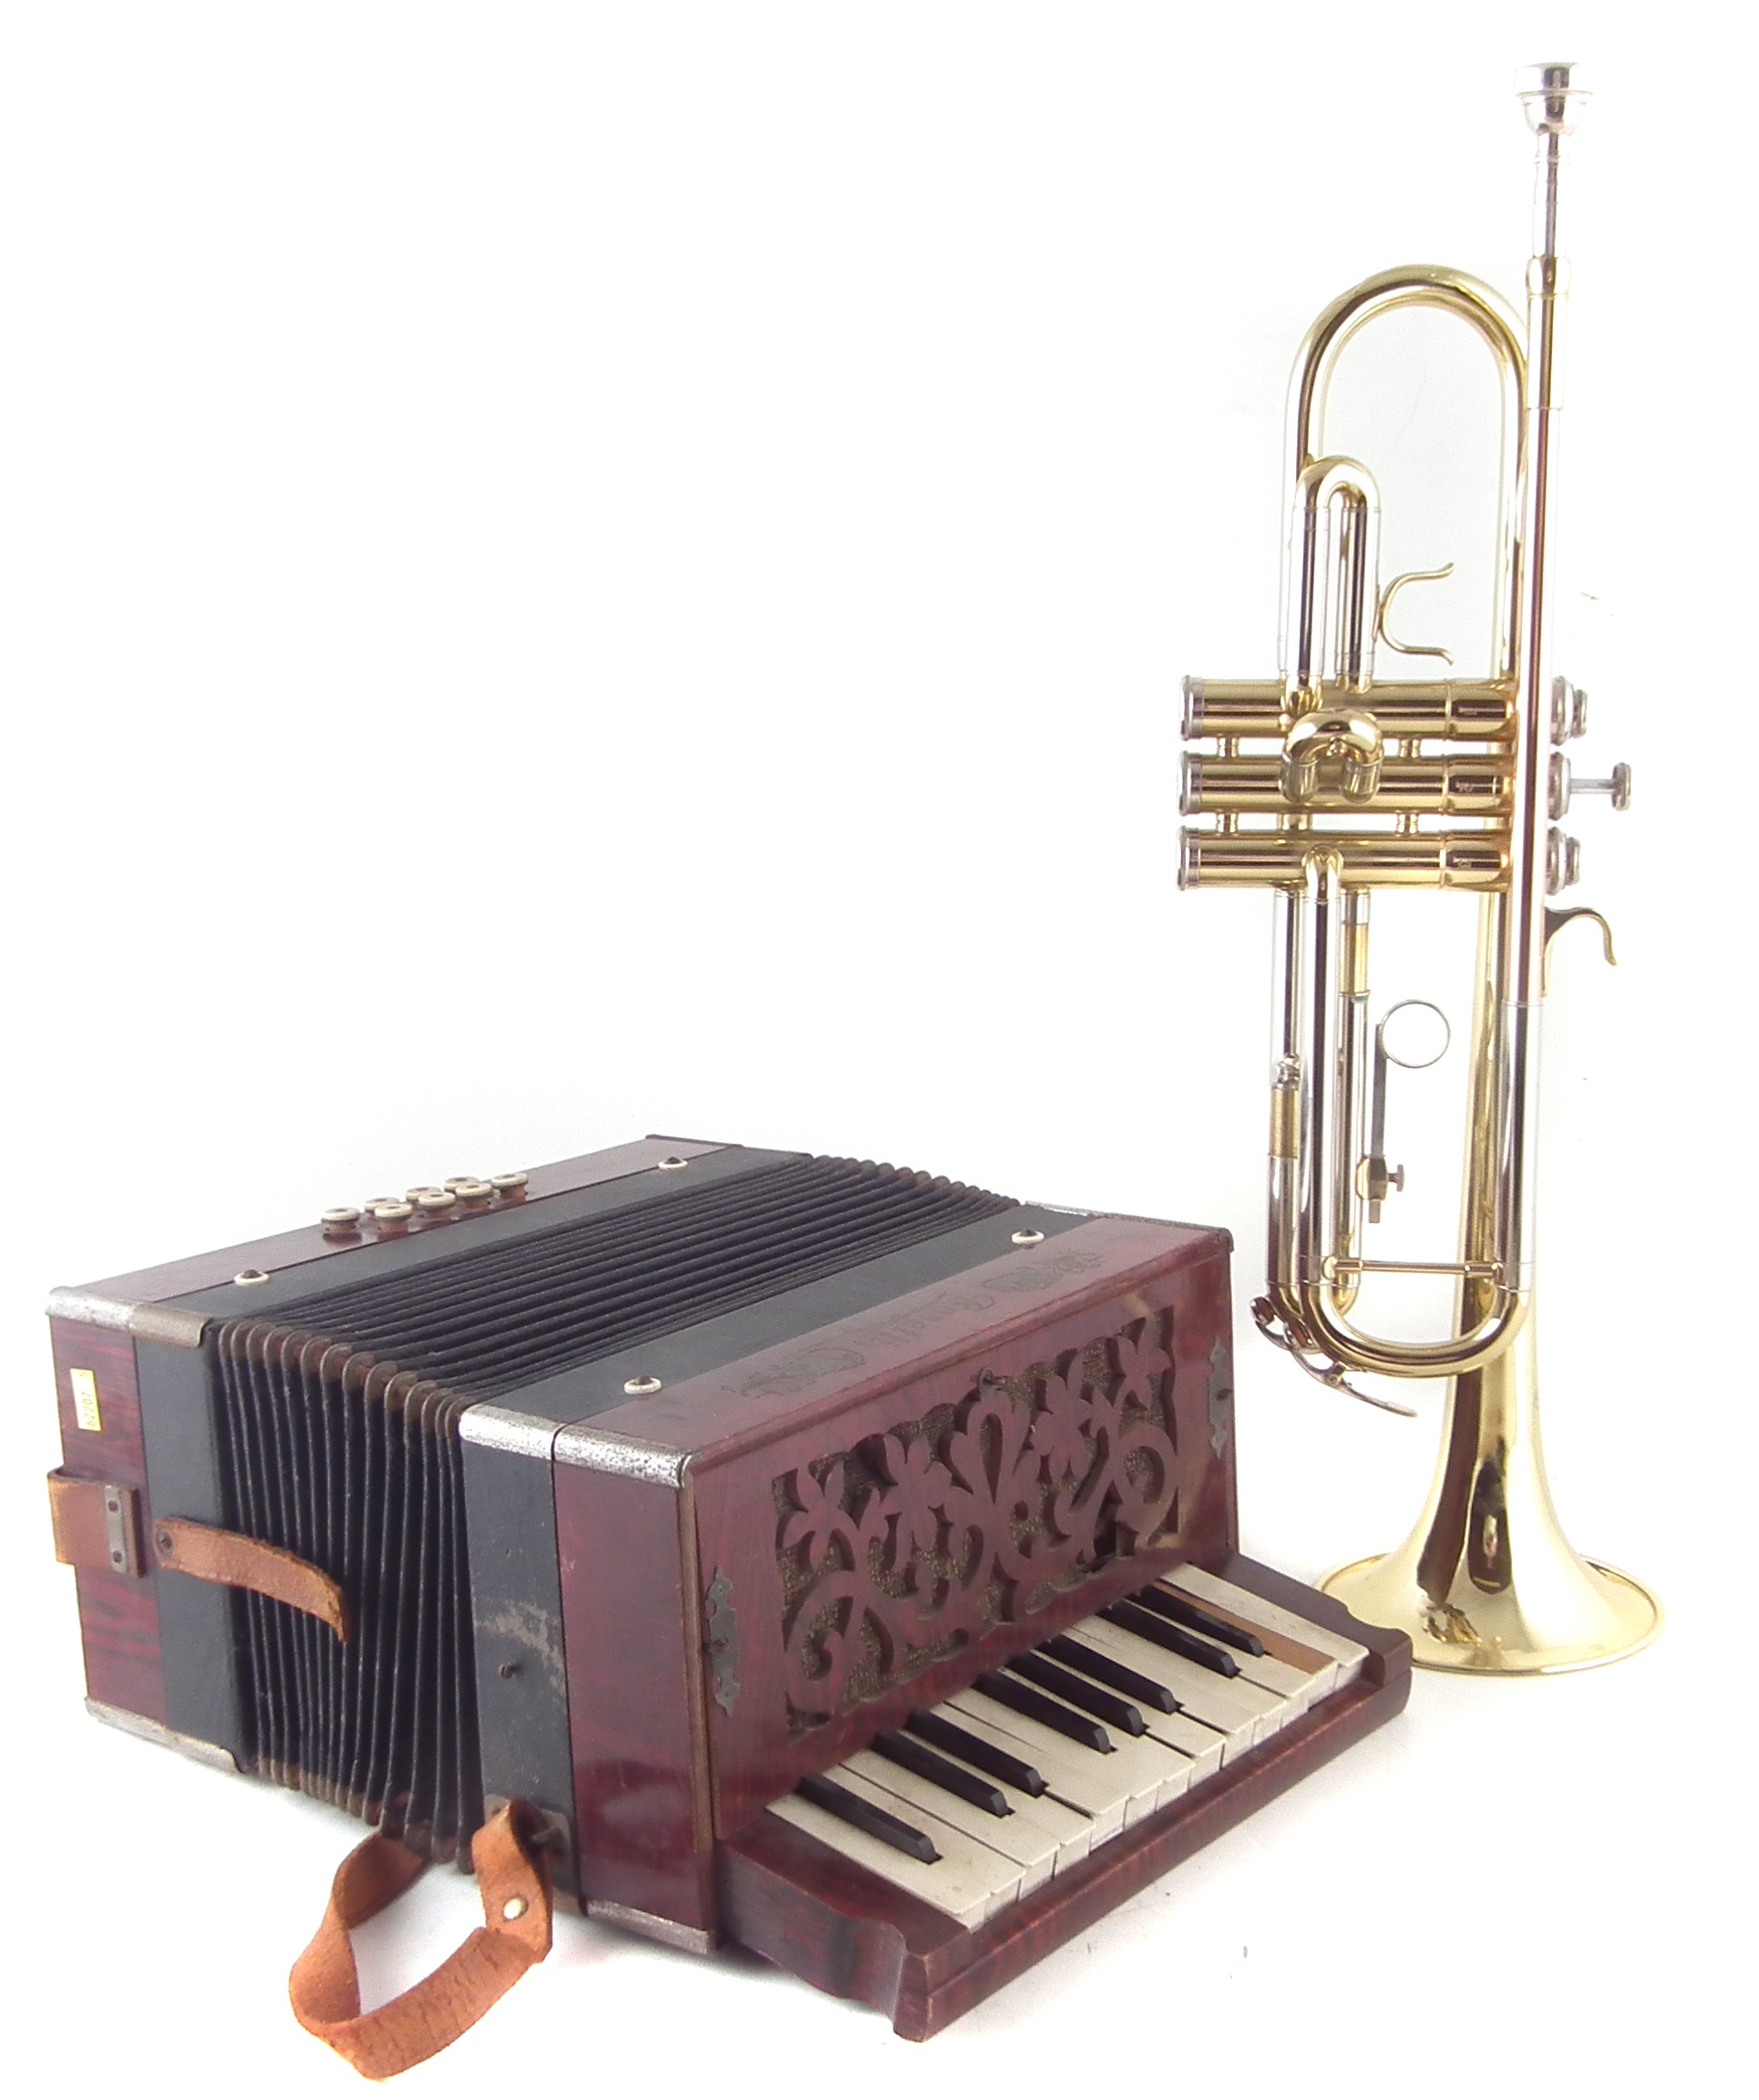 Odyssey trumpet in case and Rosetti piano accordion.